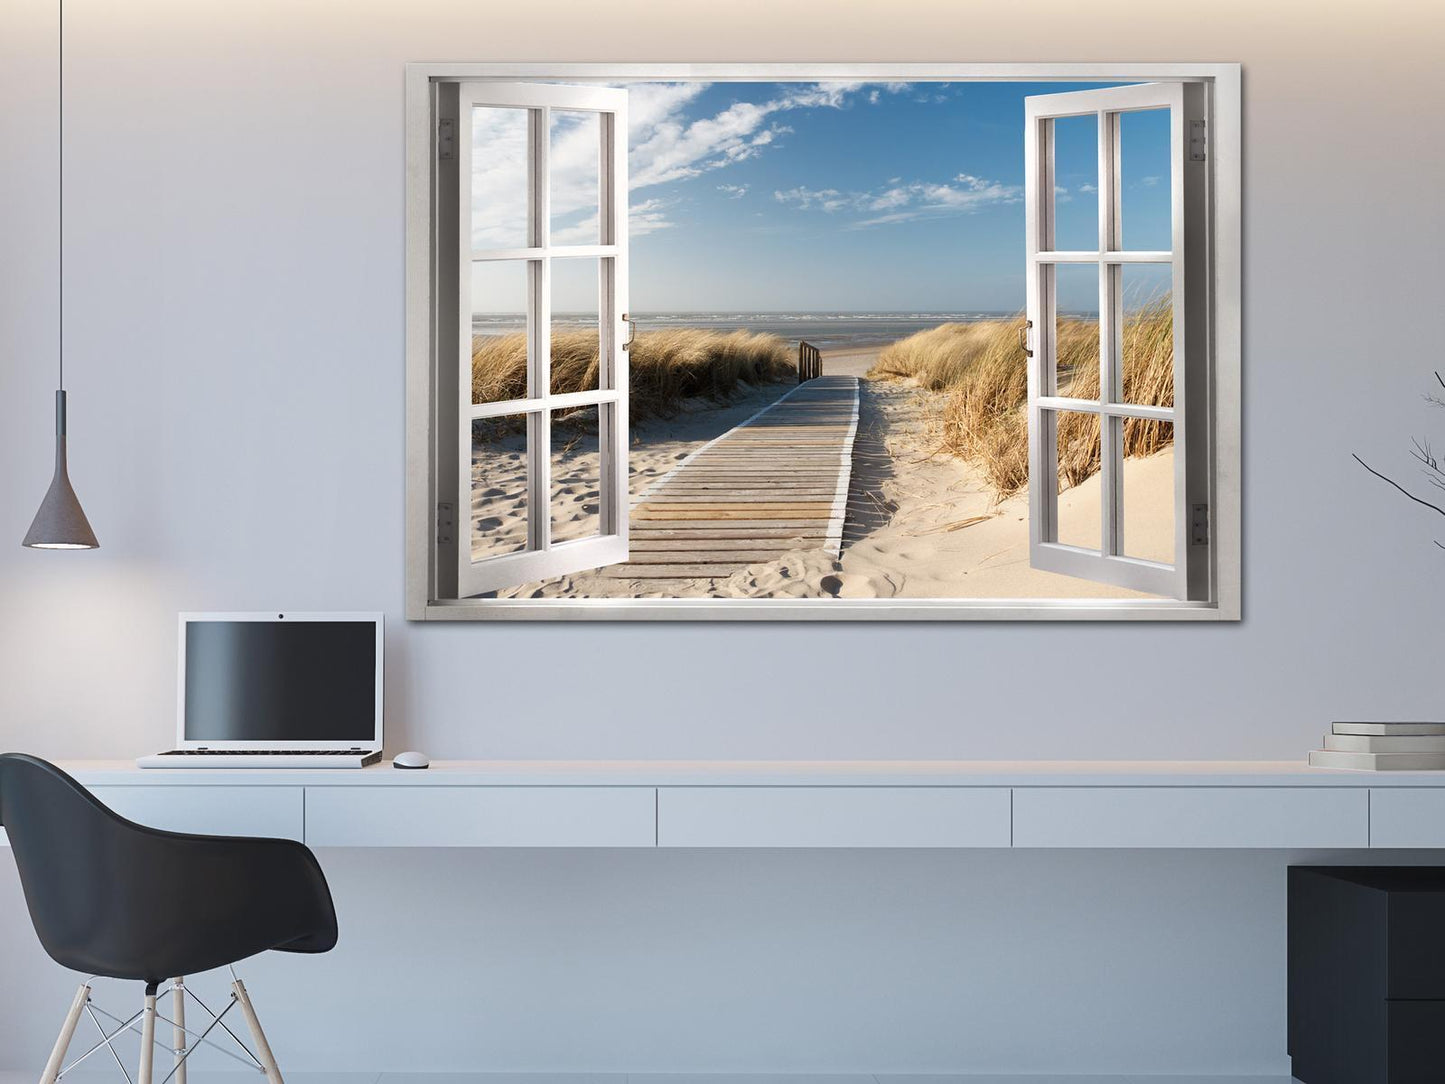 Gemälde - Fenster: Blick auf den Strand